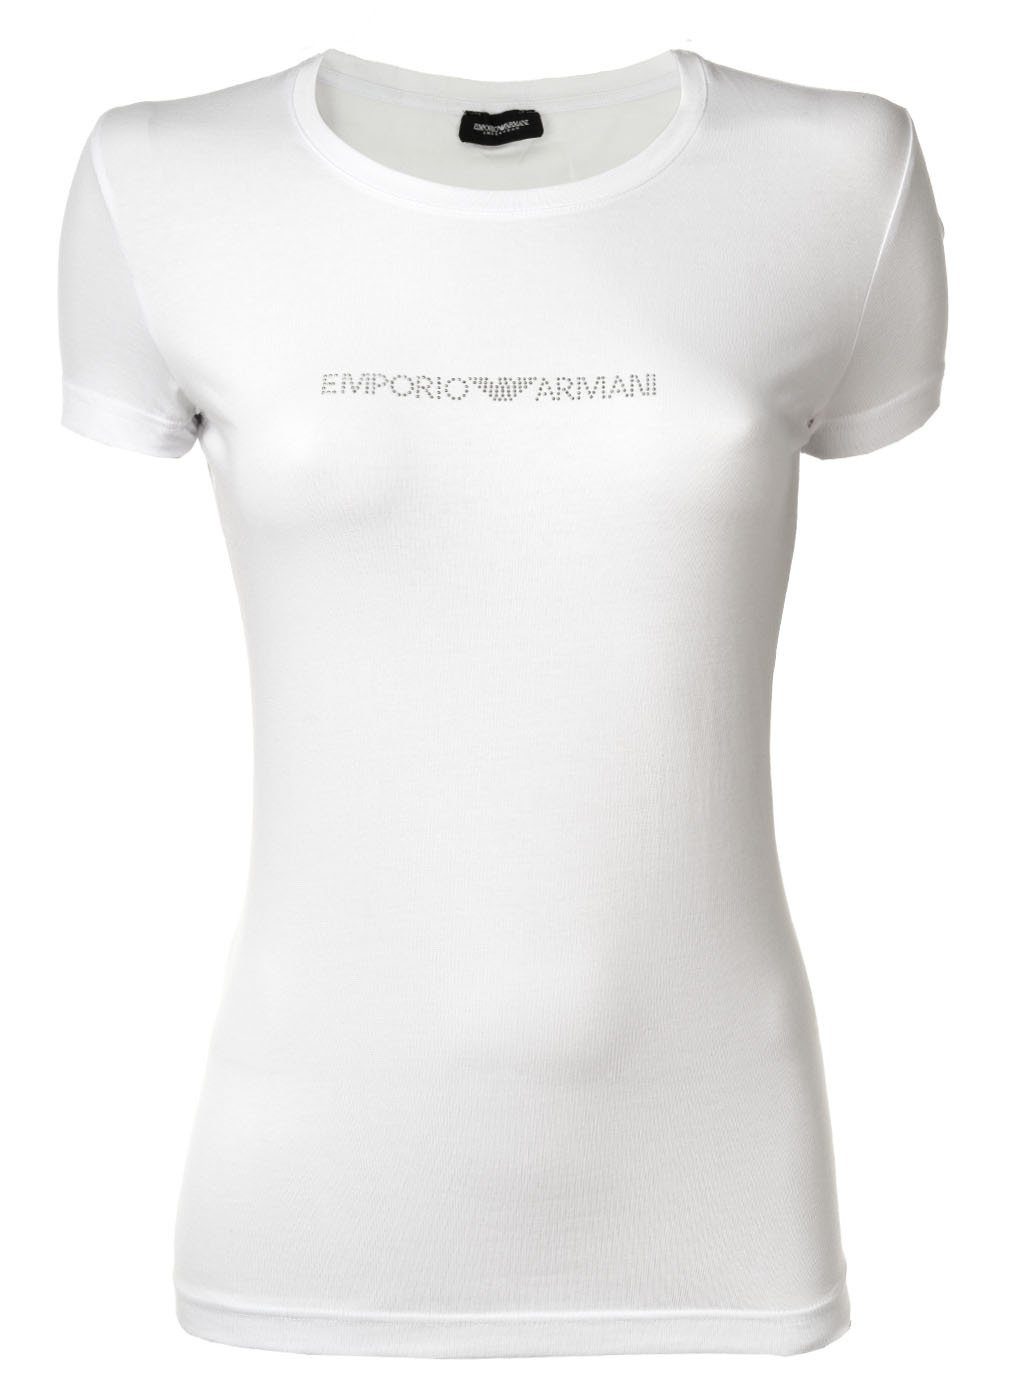 Emporio Armani T-Shirt Damen T-Shirt - Rundhals, Loungewear, Kurzarm Weiss